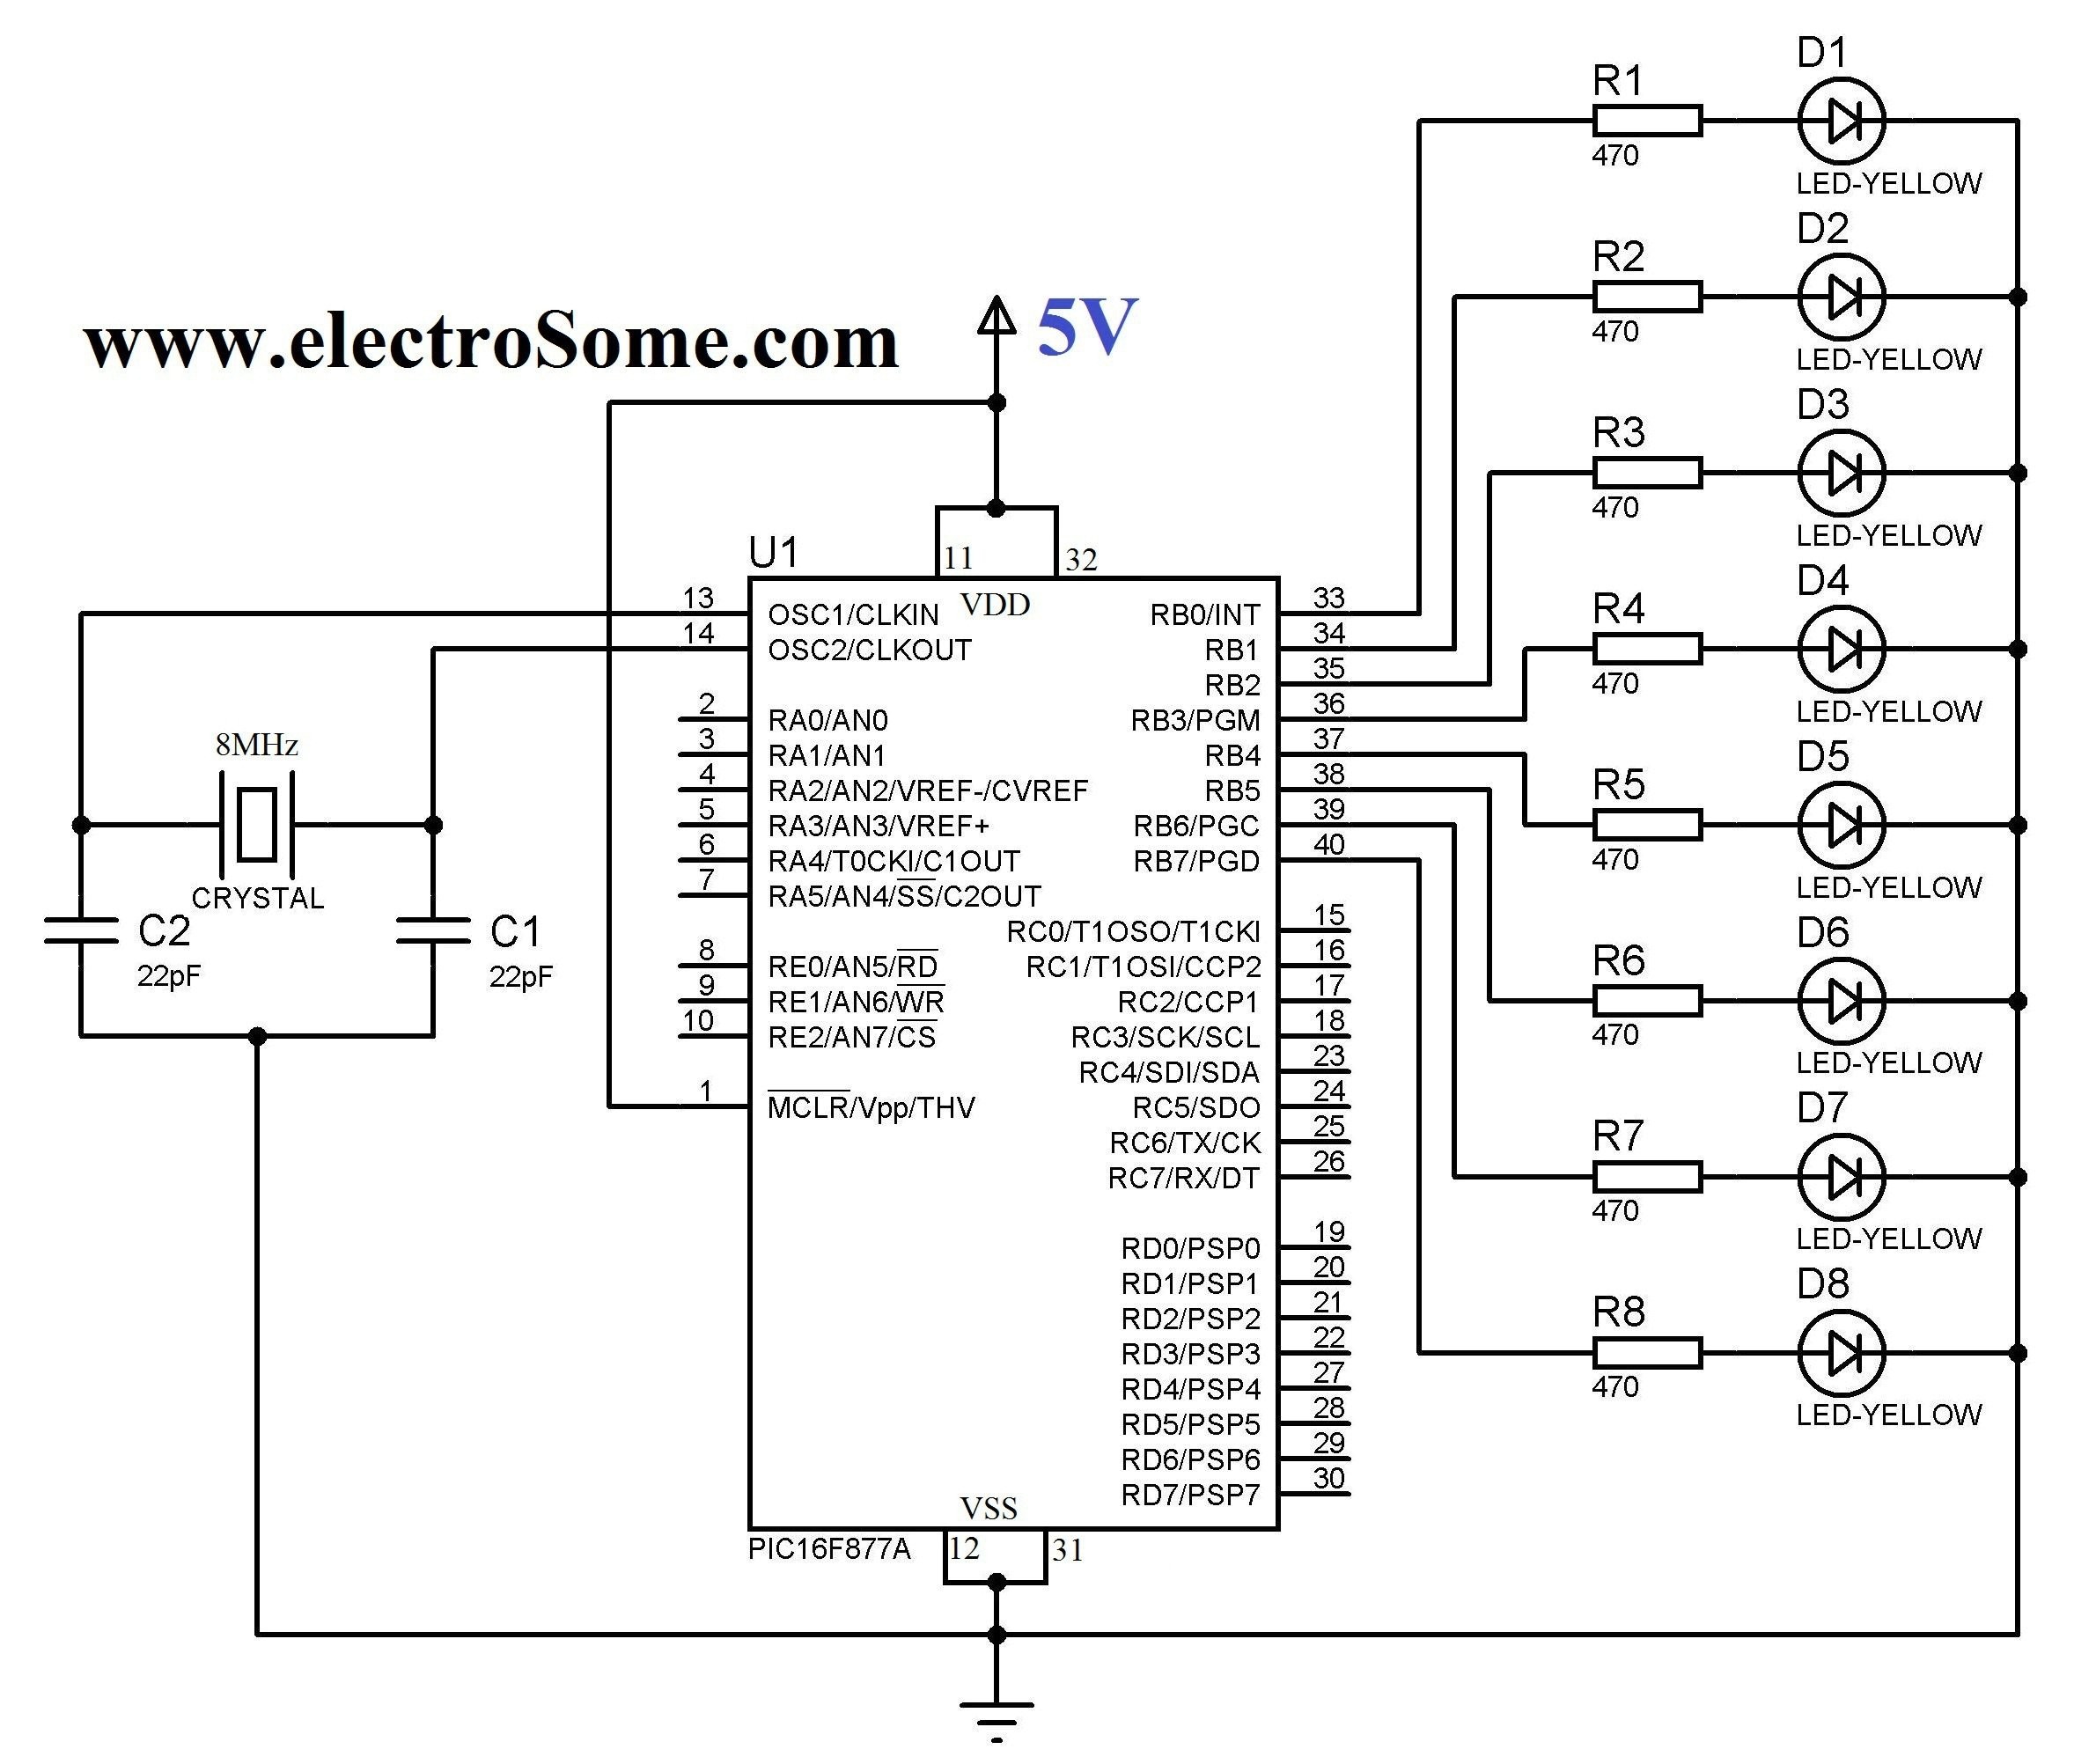 Blinking Led Using Pic Microcontroller Hi Tech C piler And Mplab Circuit Diagram electrical symbol